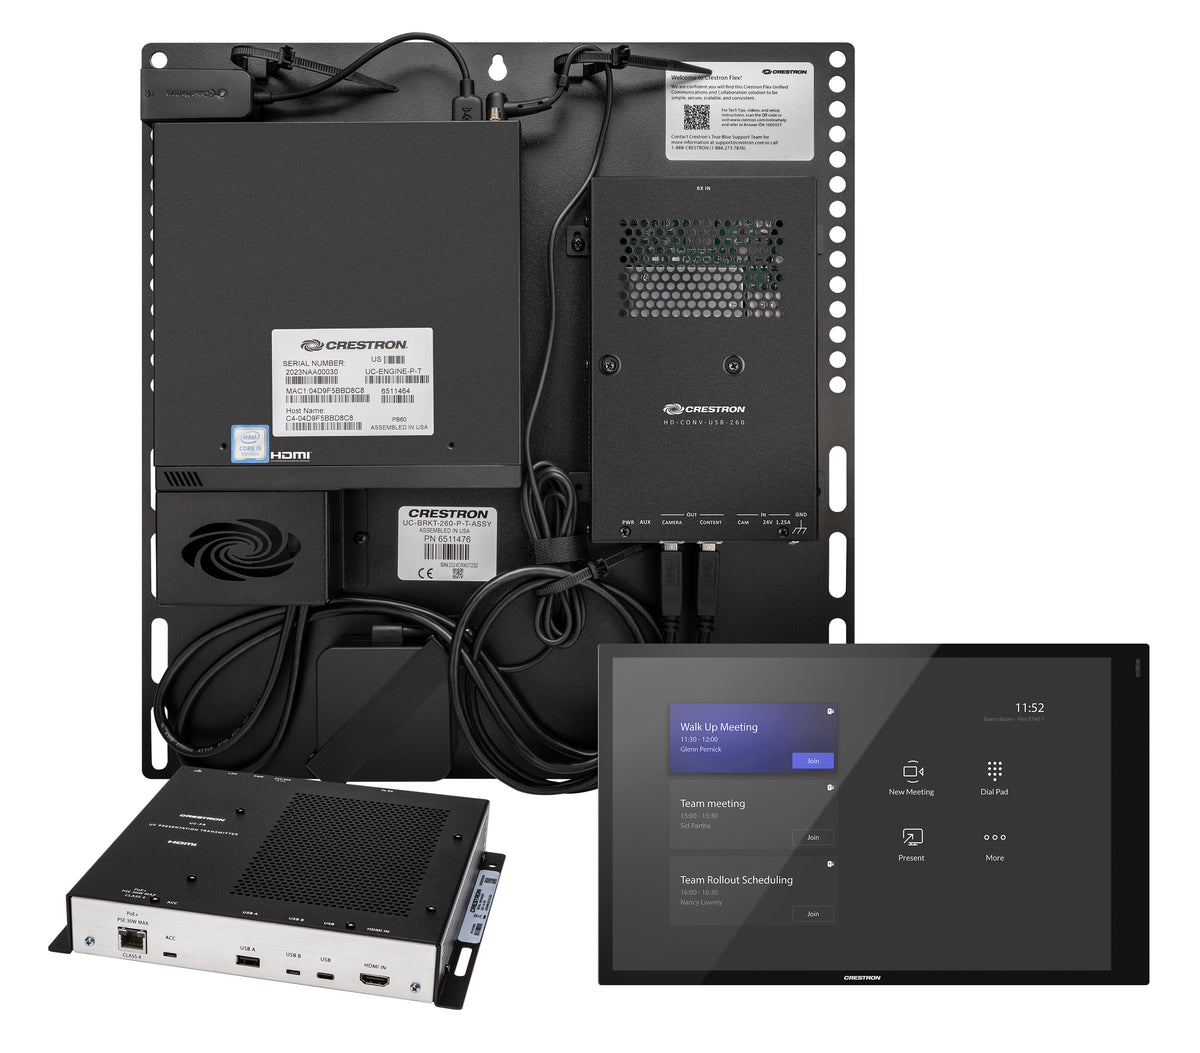 Crestron Flex UC-CX100-T-WM - Para Equipas Microsoft - Integrator Kit - conjunto para vídeo conferência (consola de ecrã tátil, mini PC, transmissor) - preto - com Wall Mounted Control Interface